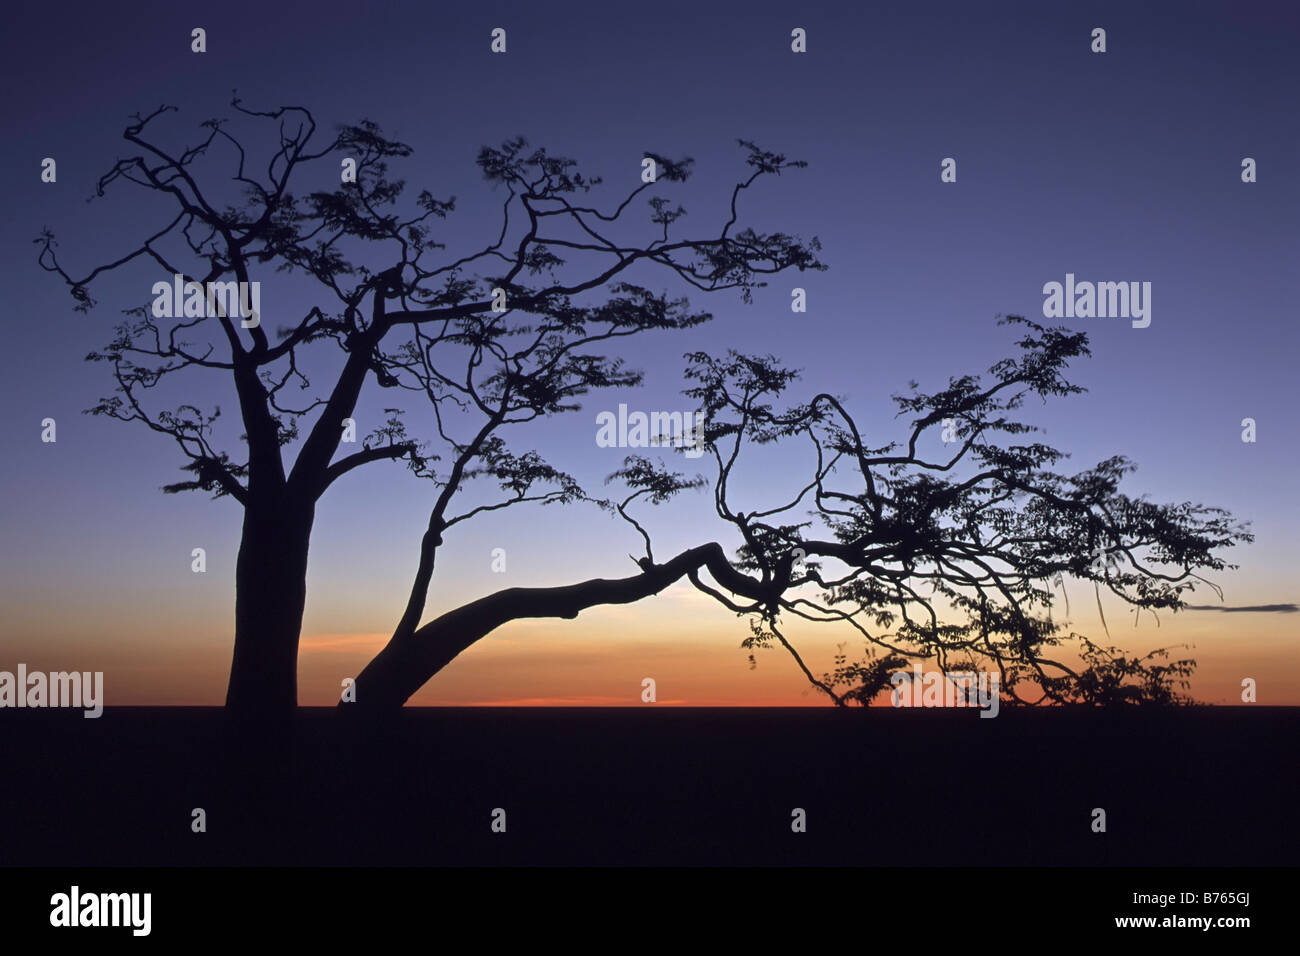 mopane colophospermum tree pane sunset sky etosha np namibia africa afterglow national park sky evening tree backlight Stock Photo